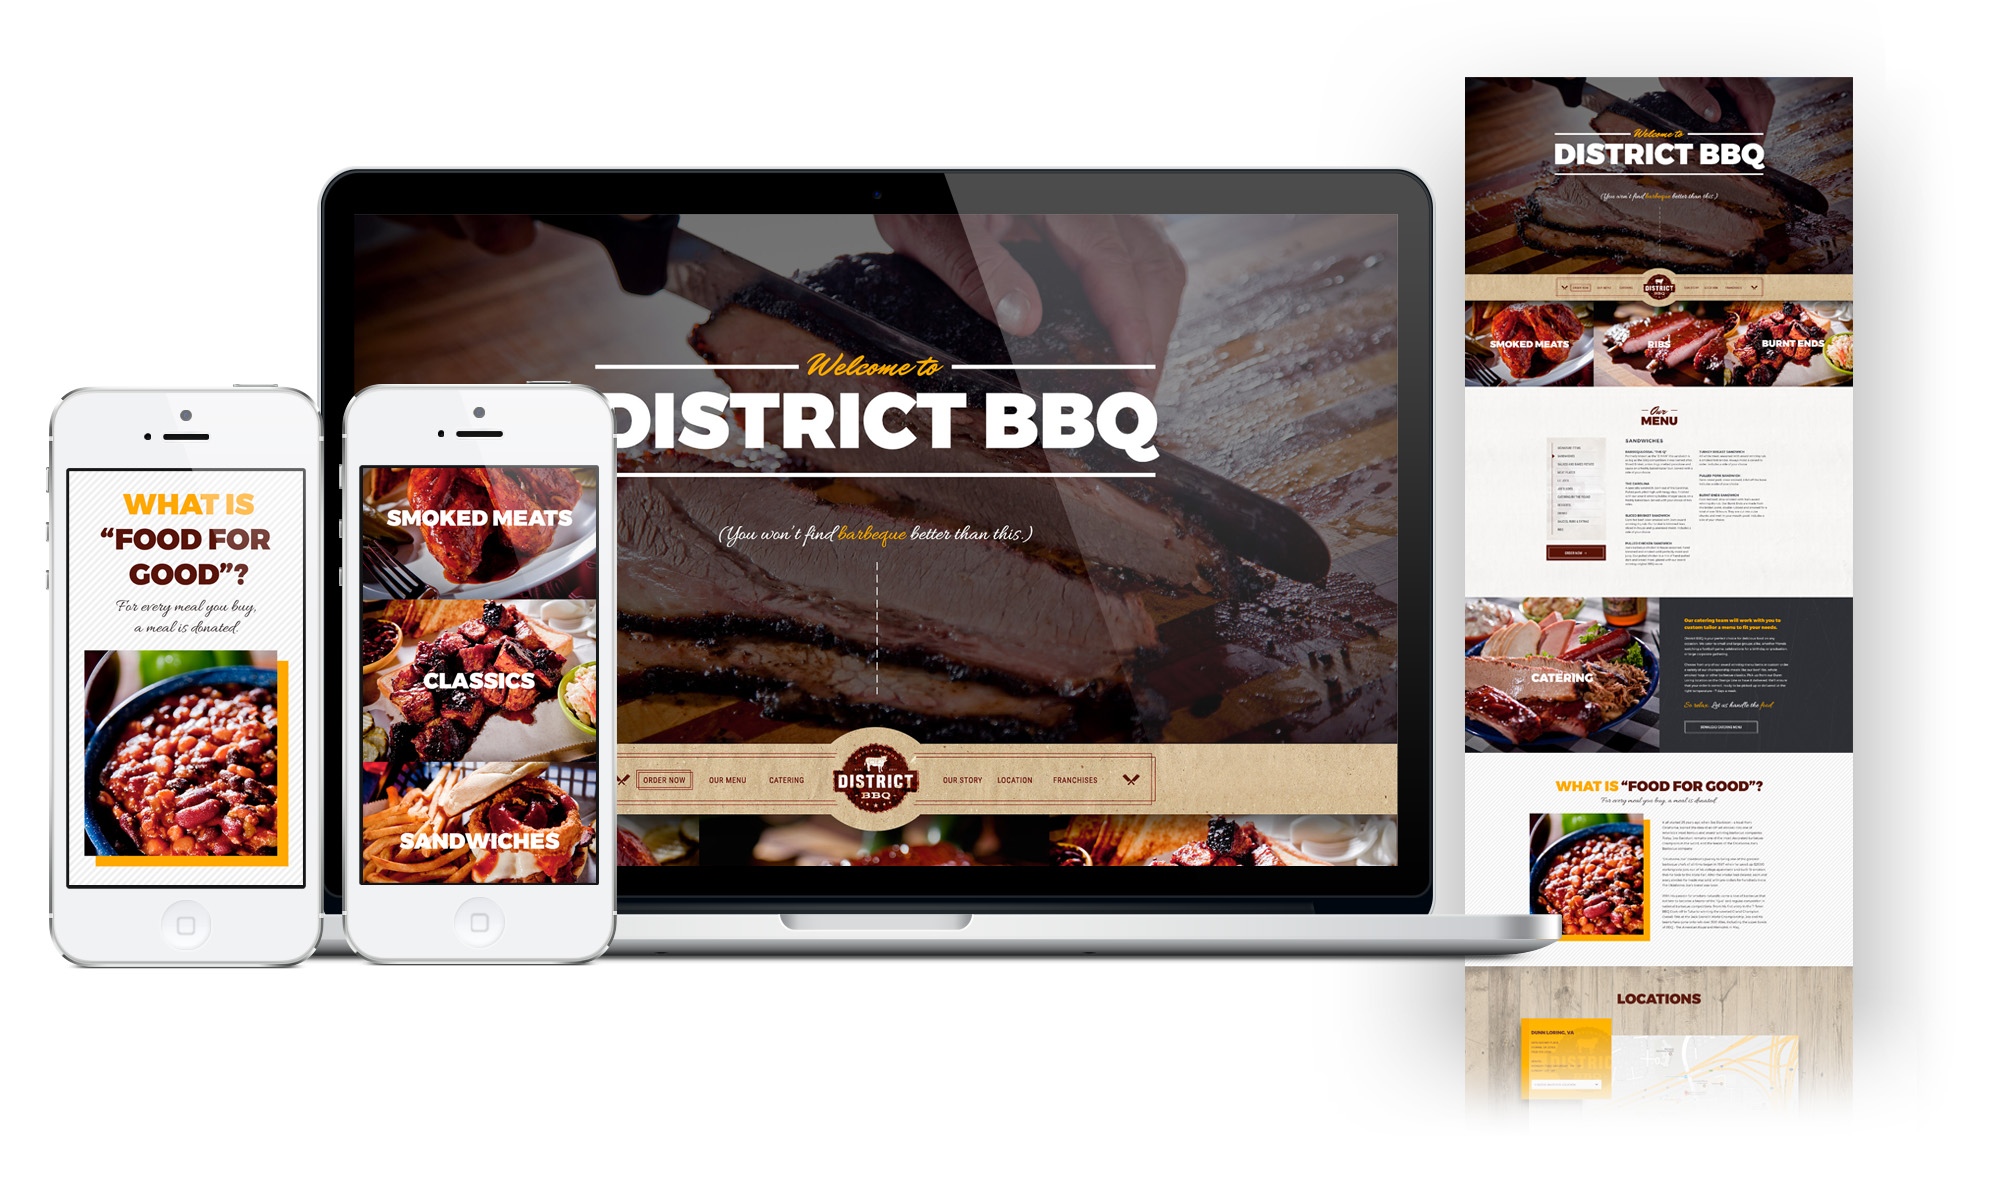 District BBQ website